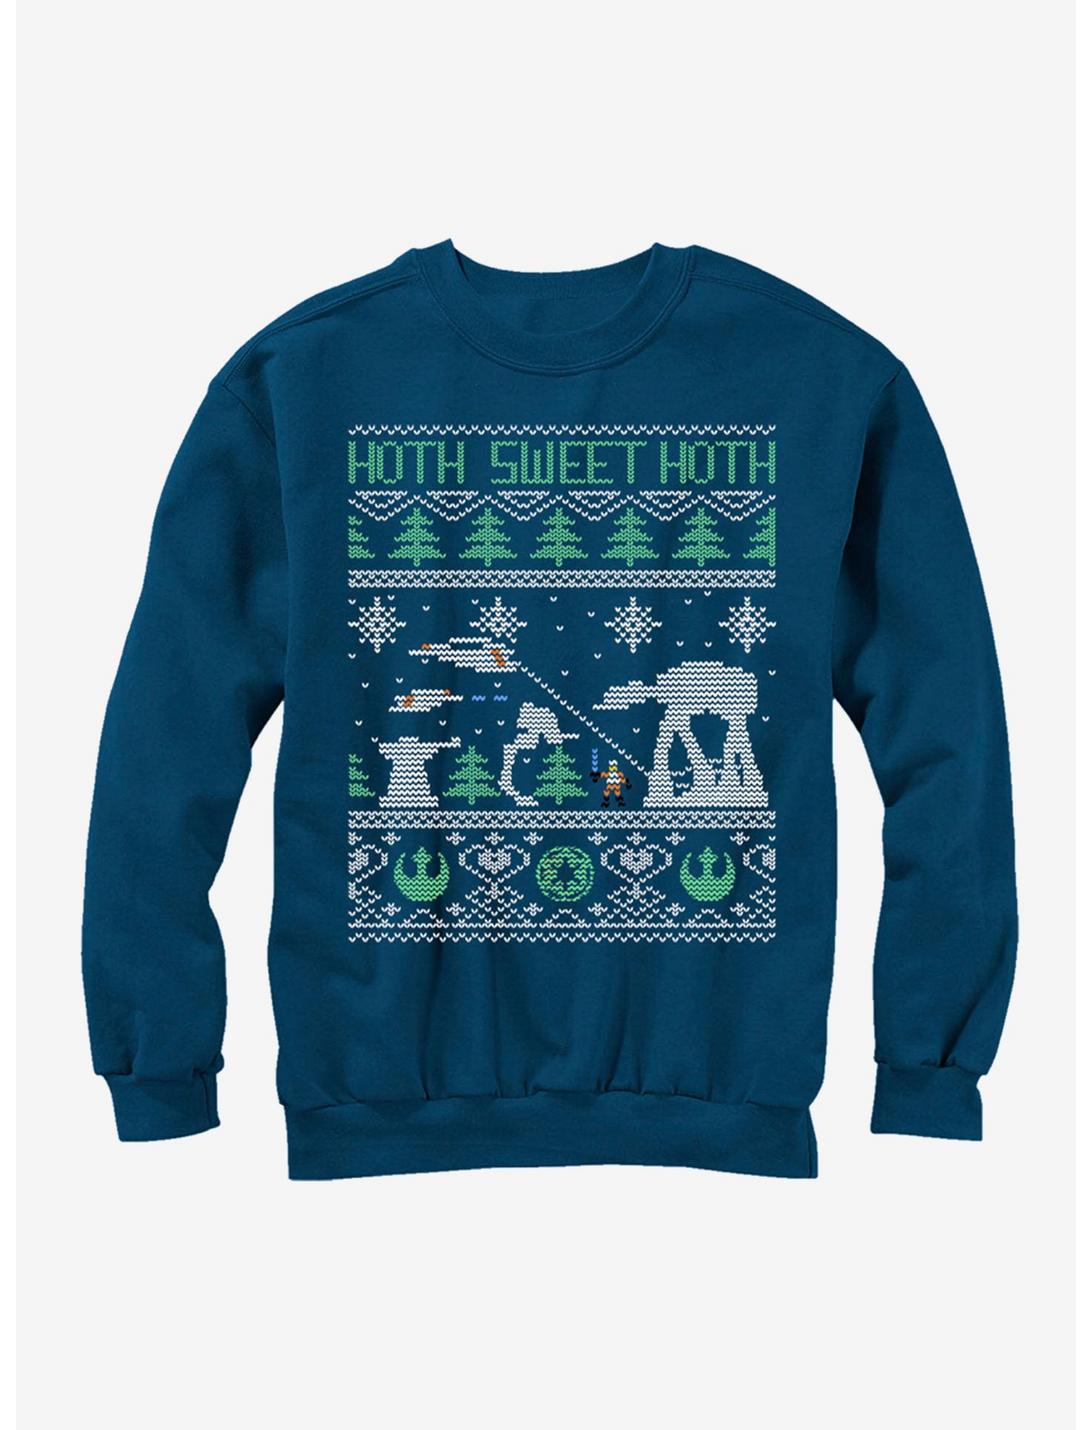 Star Wars Hoth Sweet Hoth Ugly Christmas Sweater Sweatshirt, NAVY, hi-res